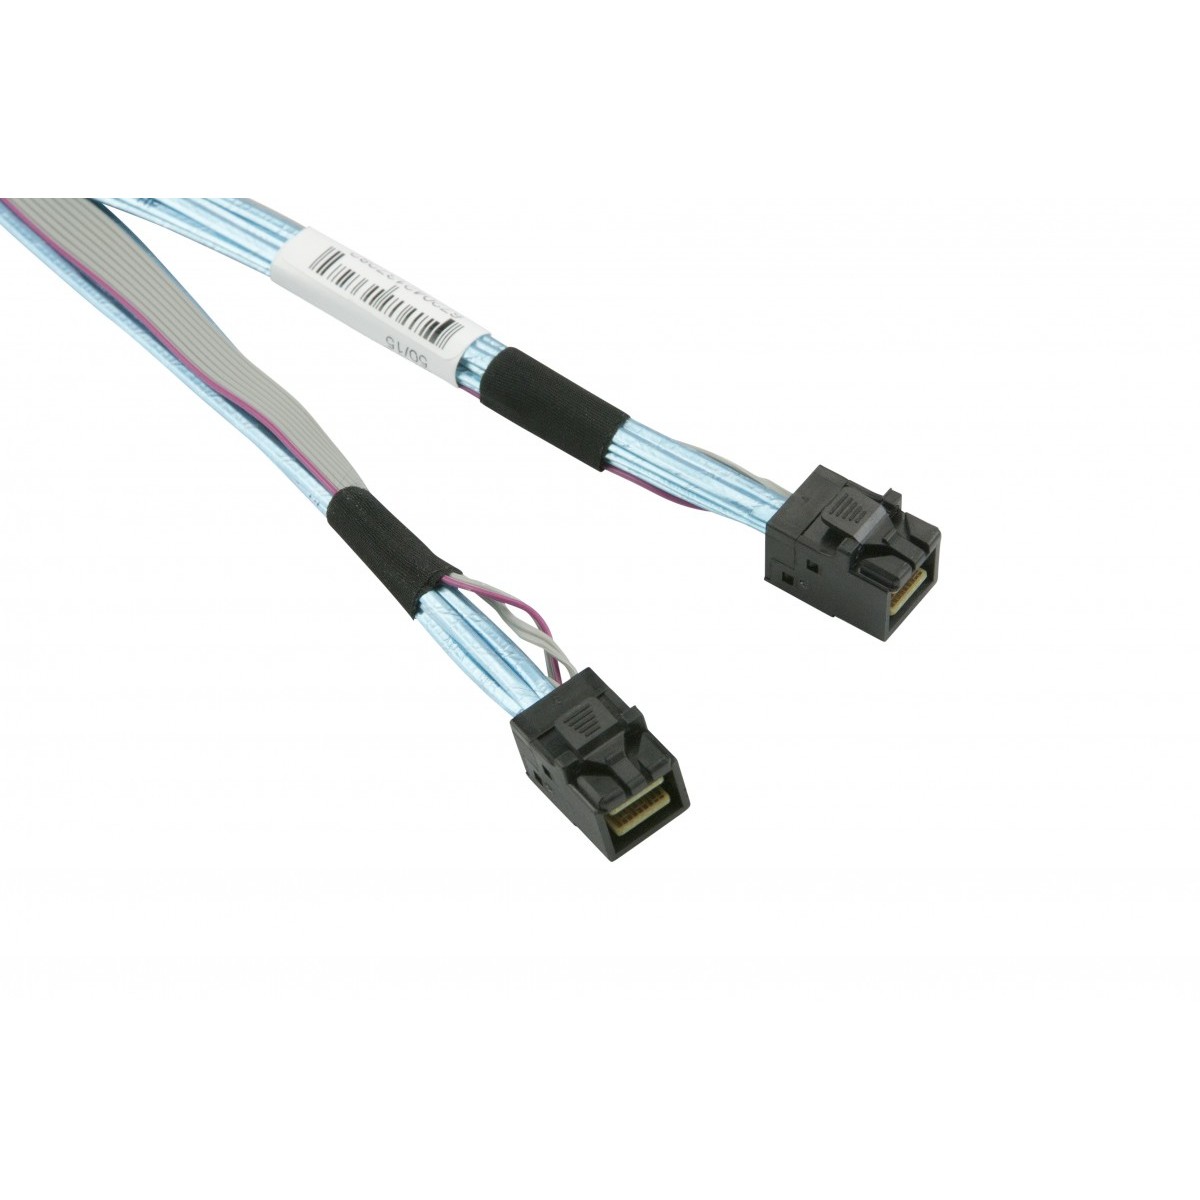 Supermicro CBL-SAST-0531-01 Serial Attached SCSI (SAS) cable